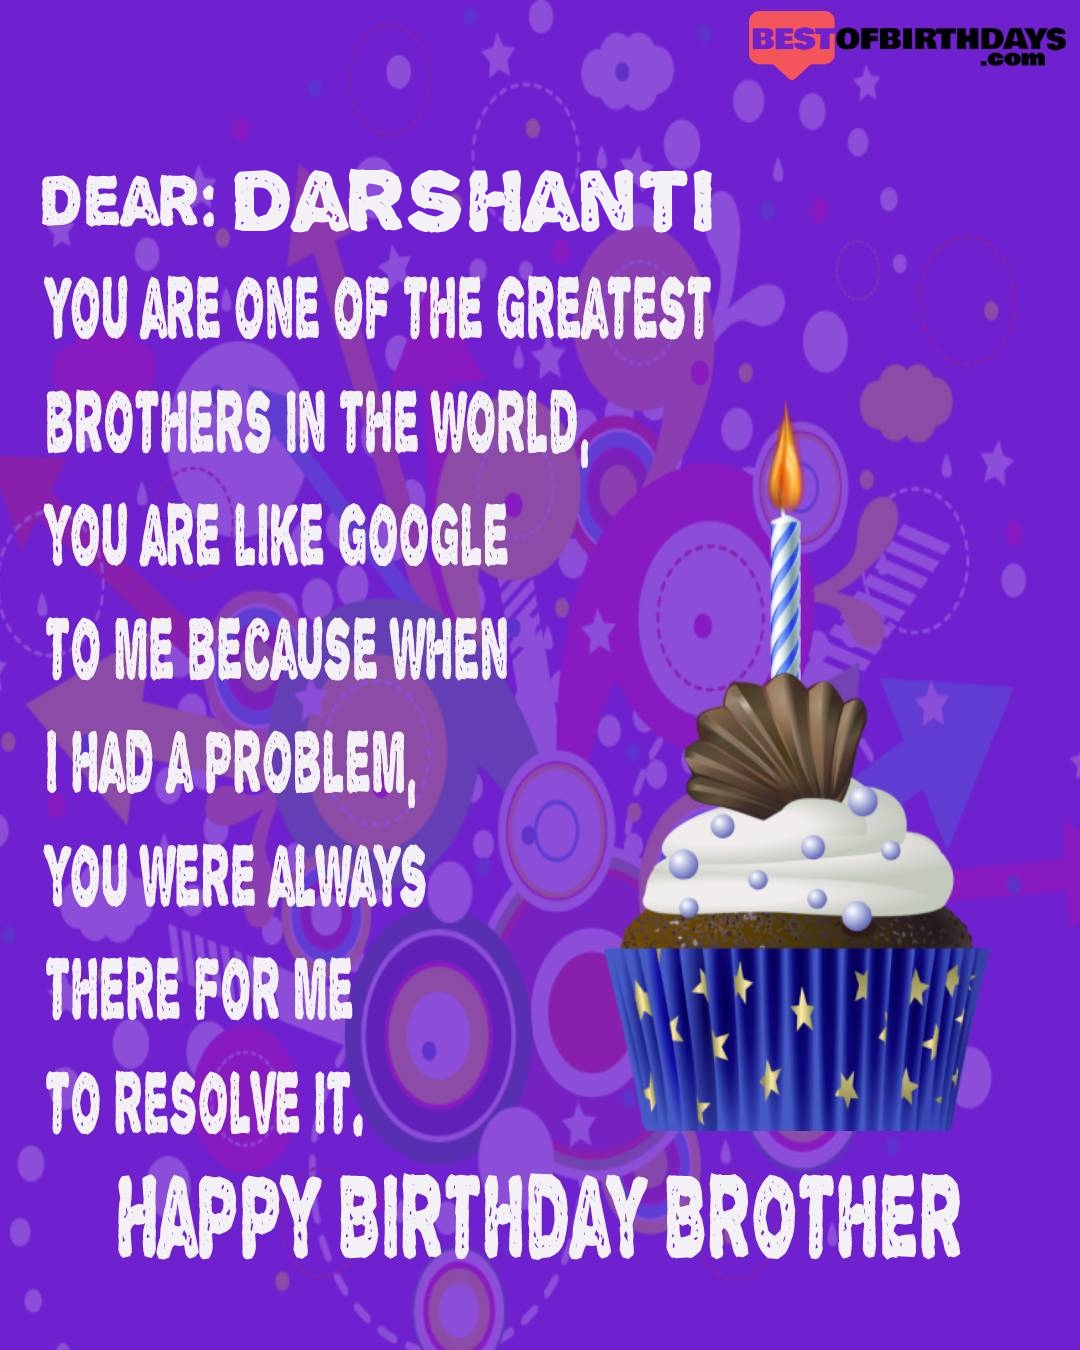 Happy birthday darshanti bhai brother bro